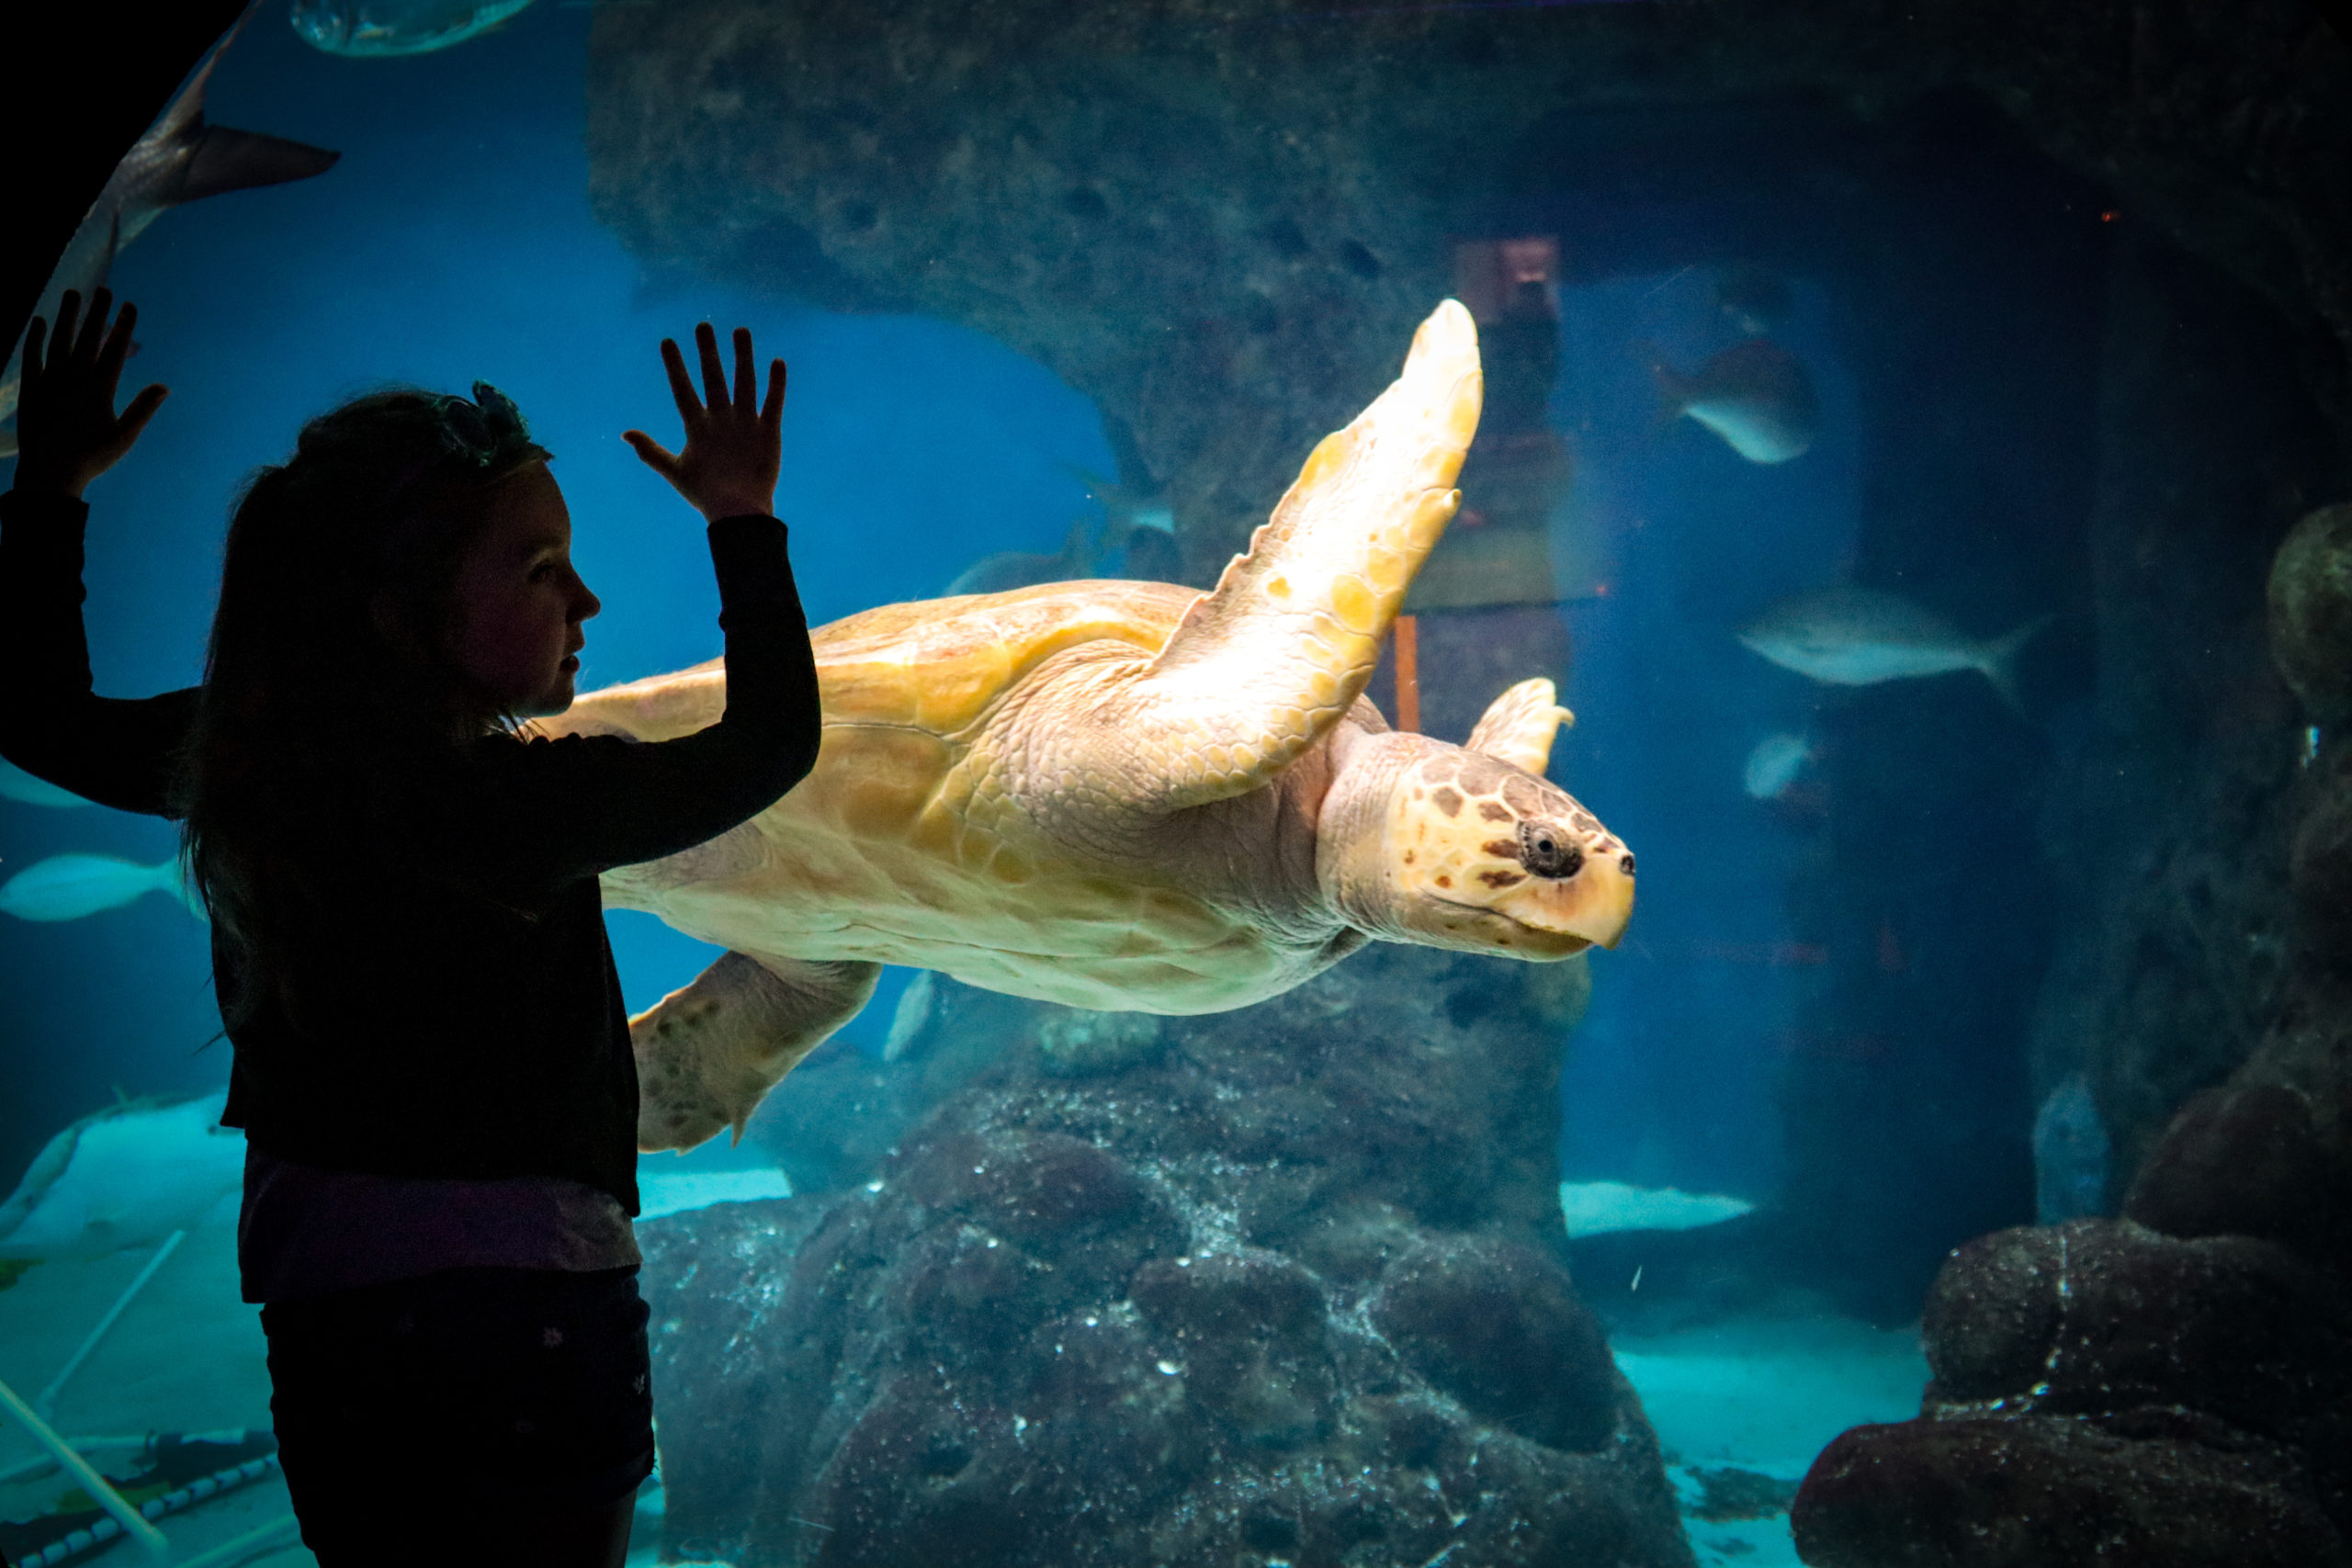 A young girl looks at a sea turtle in an aquarium exhibit at The Florida Aquarium.